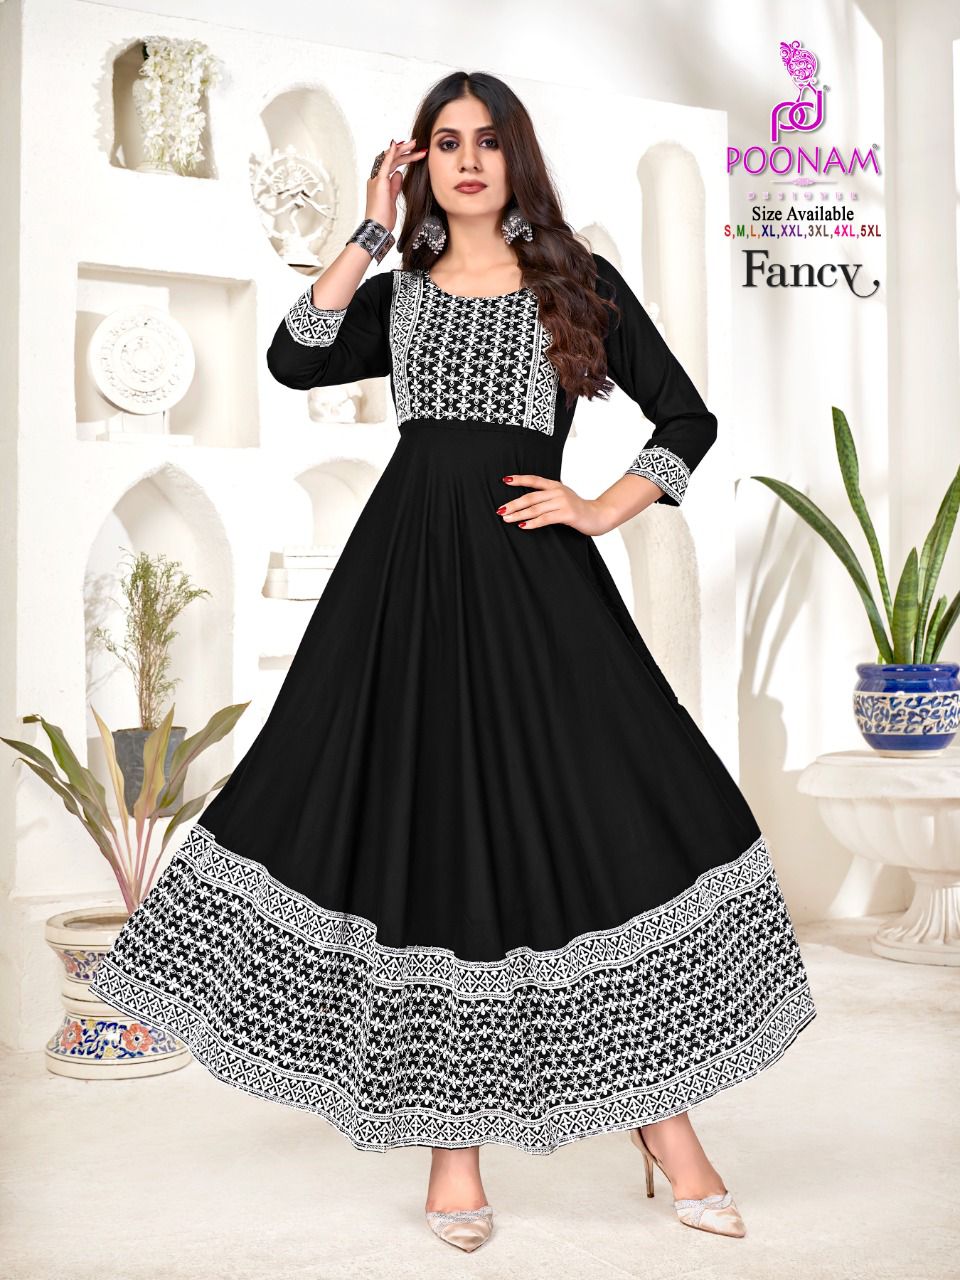 1680125502poonam fancy designer festive wear long anarkali kurti collection1%20(4)